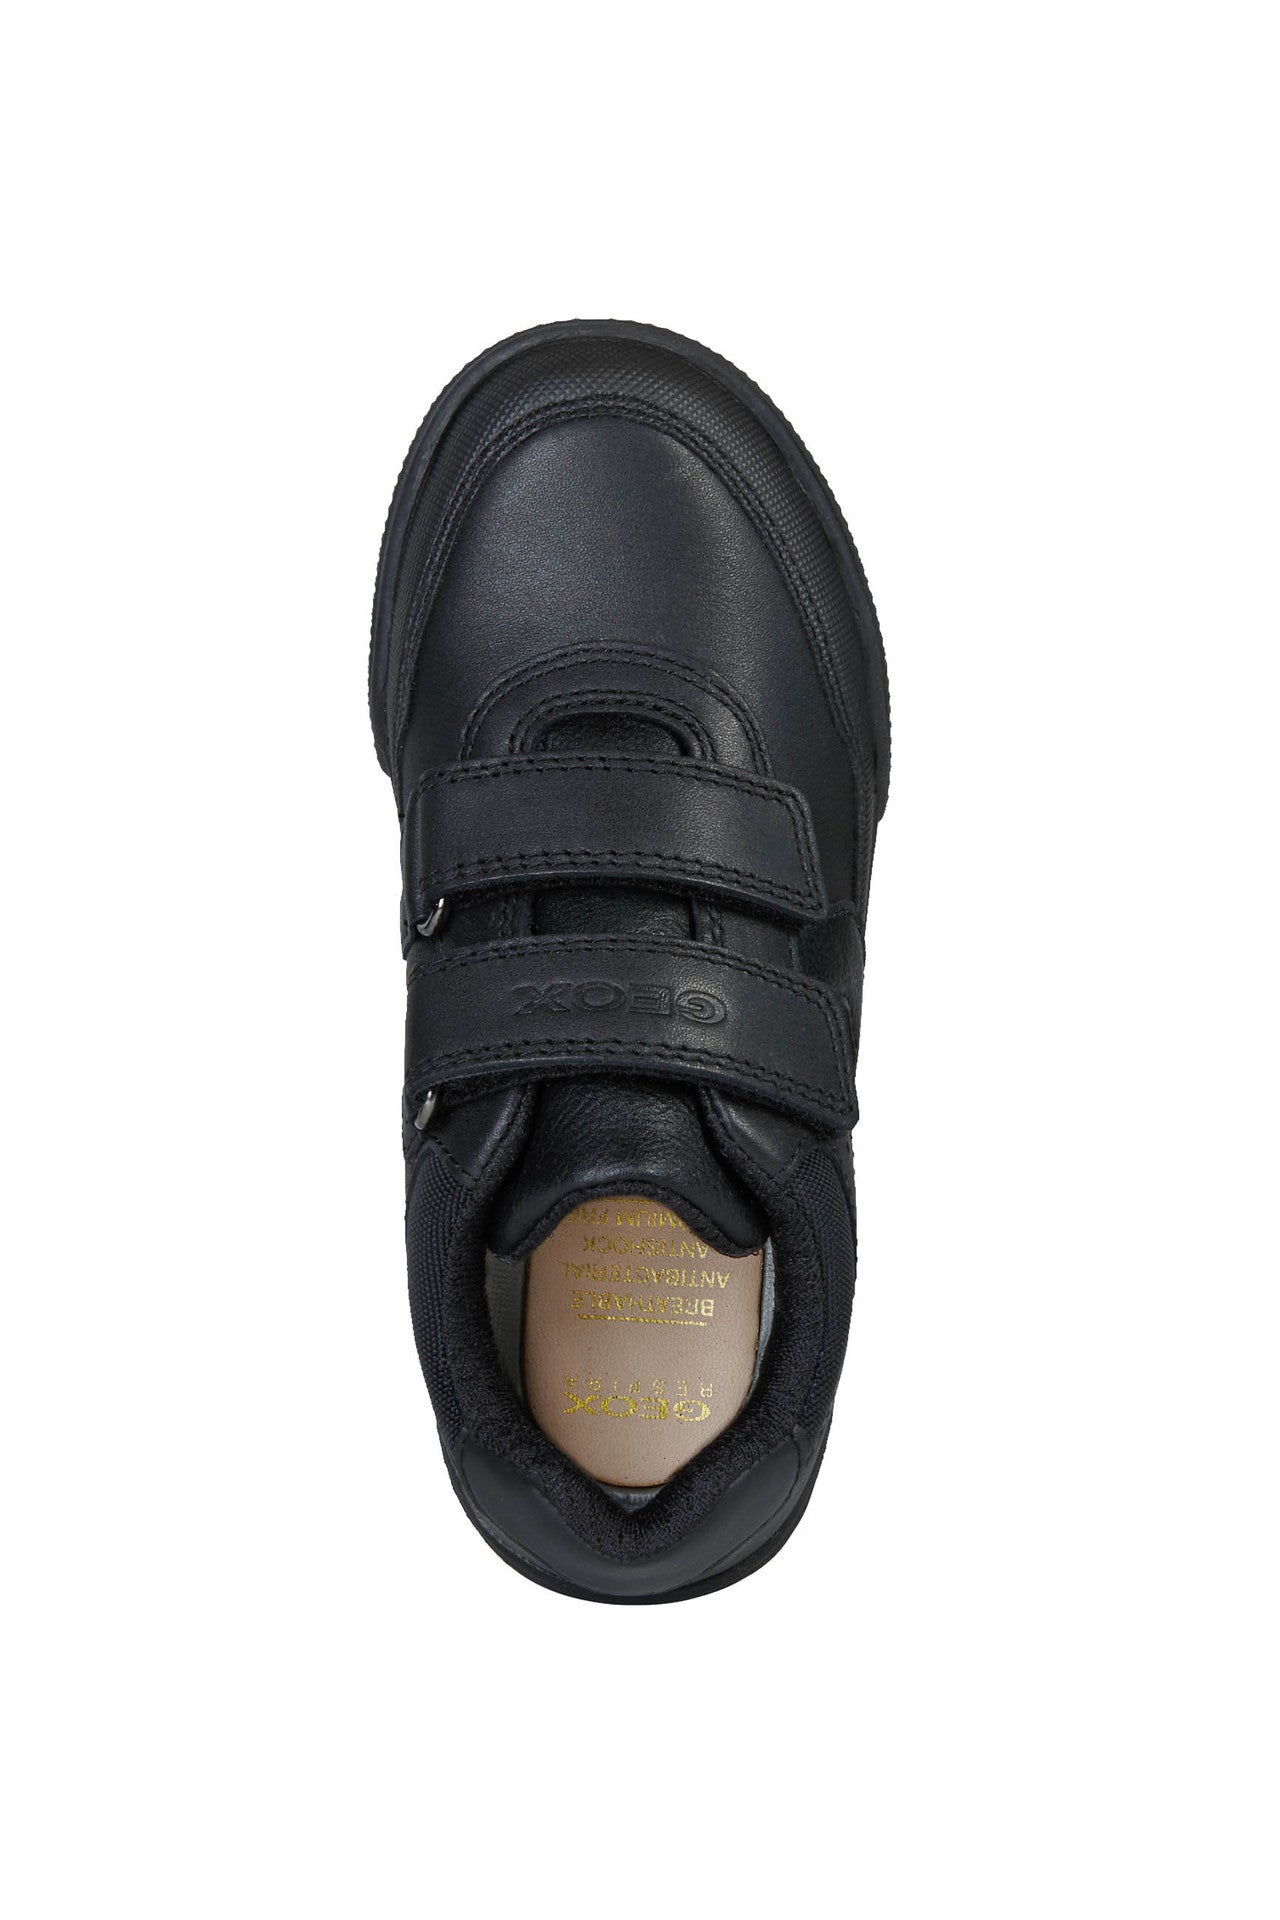 Poseido Black Leather Boys School Shoe